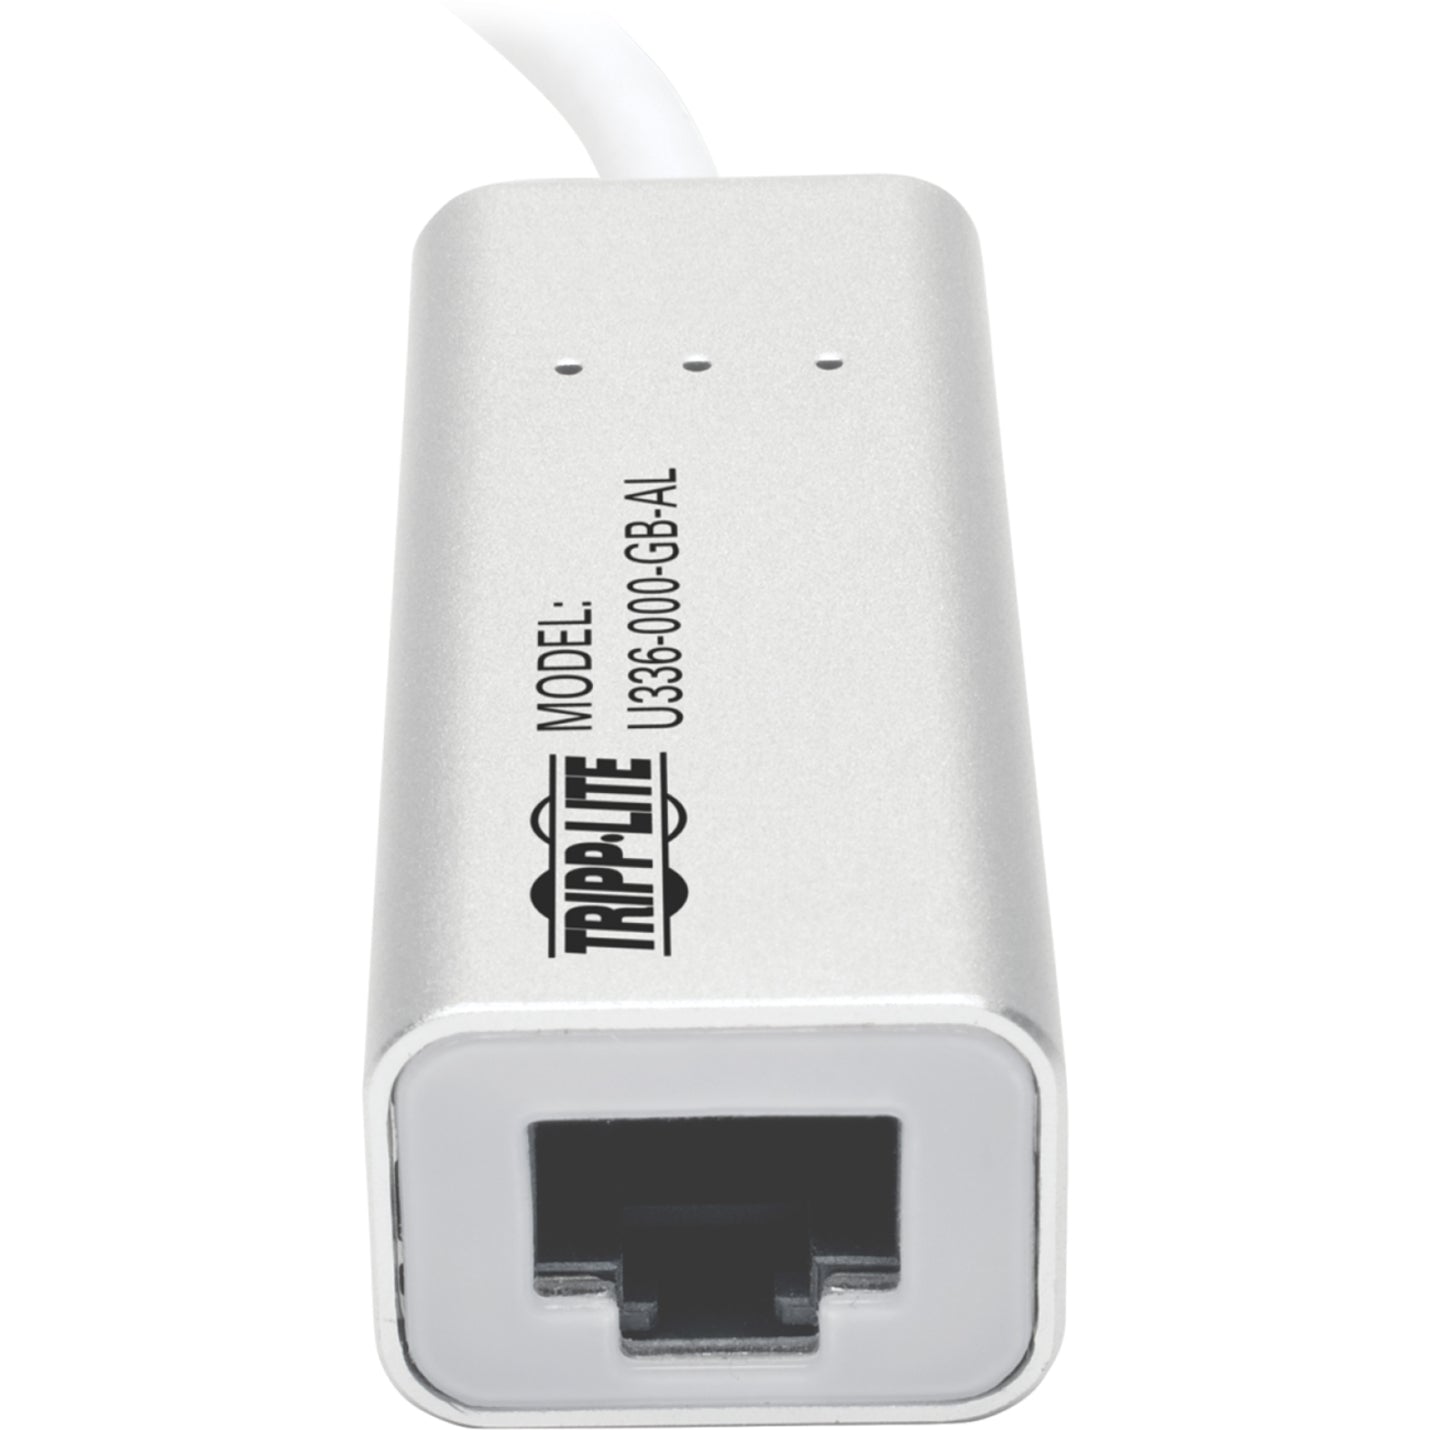 Tripp Lite U336-000-GB-AL USB 3.0 SuperSpeed to Gigabit Ethernet NIC Network Adapter, High-Speed Internet Connection